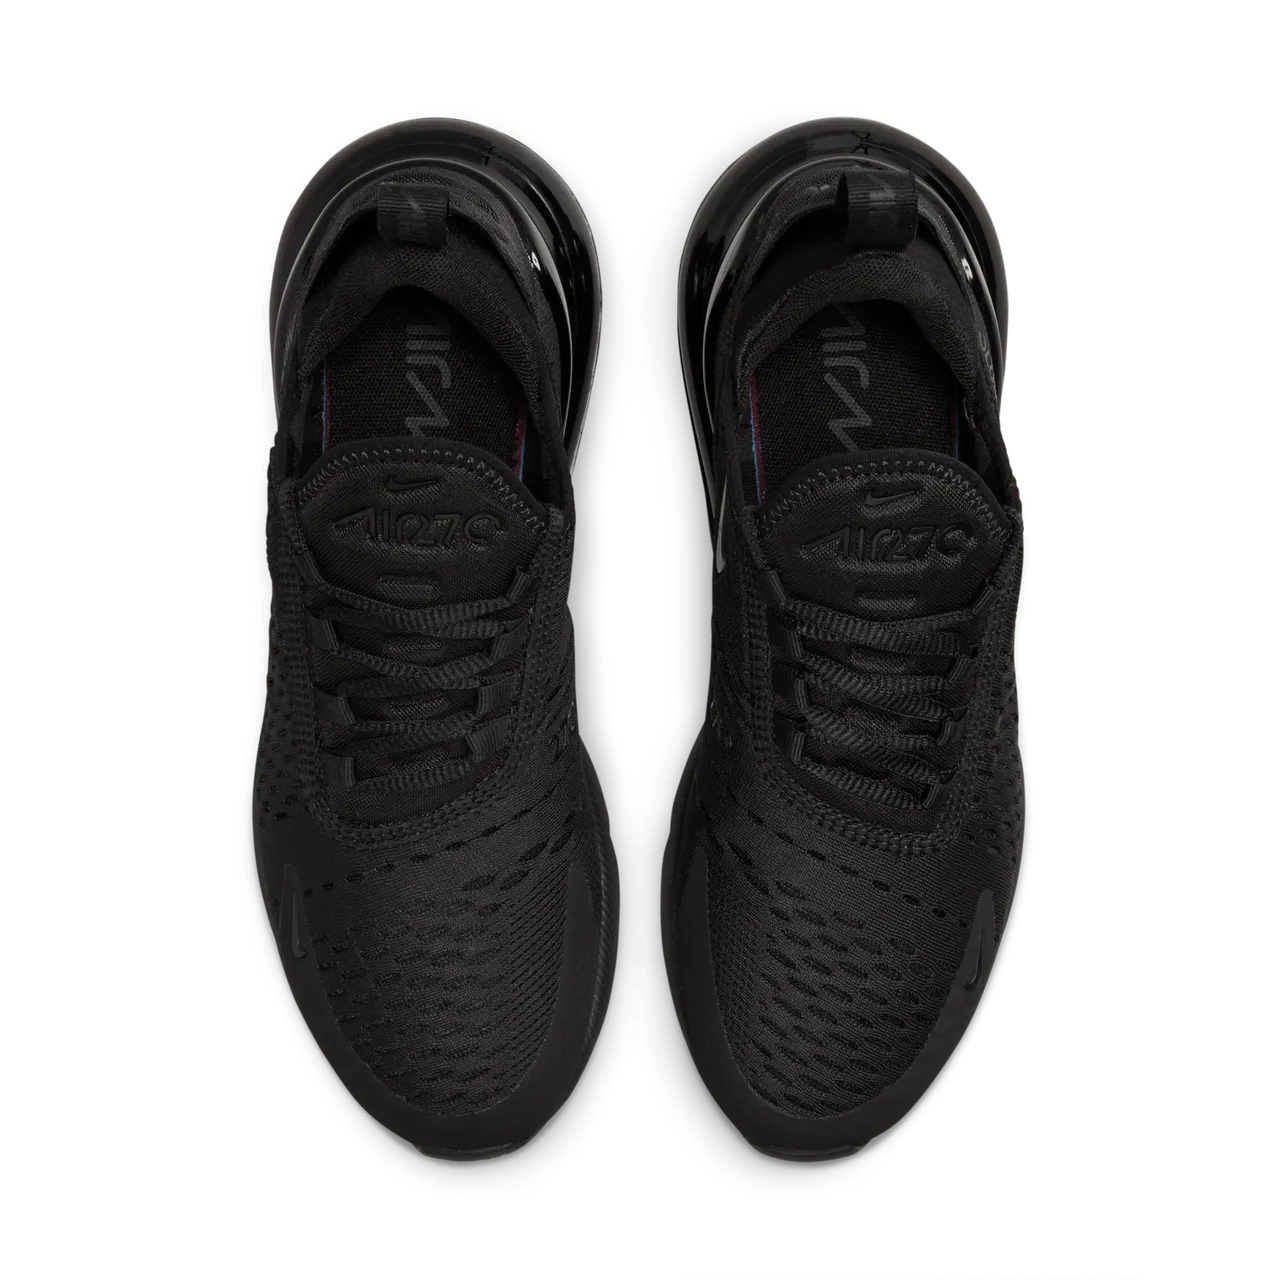 Nike Air Max 270 Women's Shoes - Black